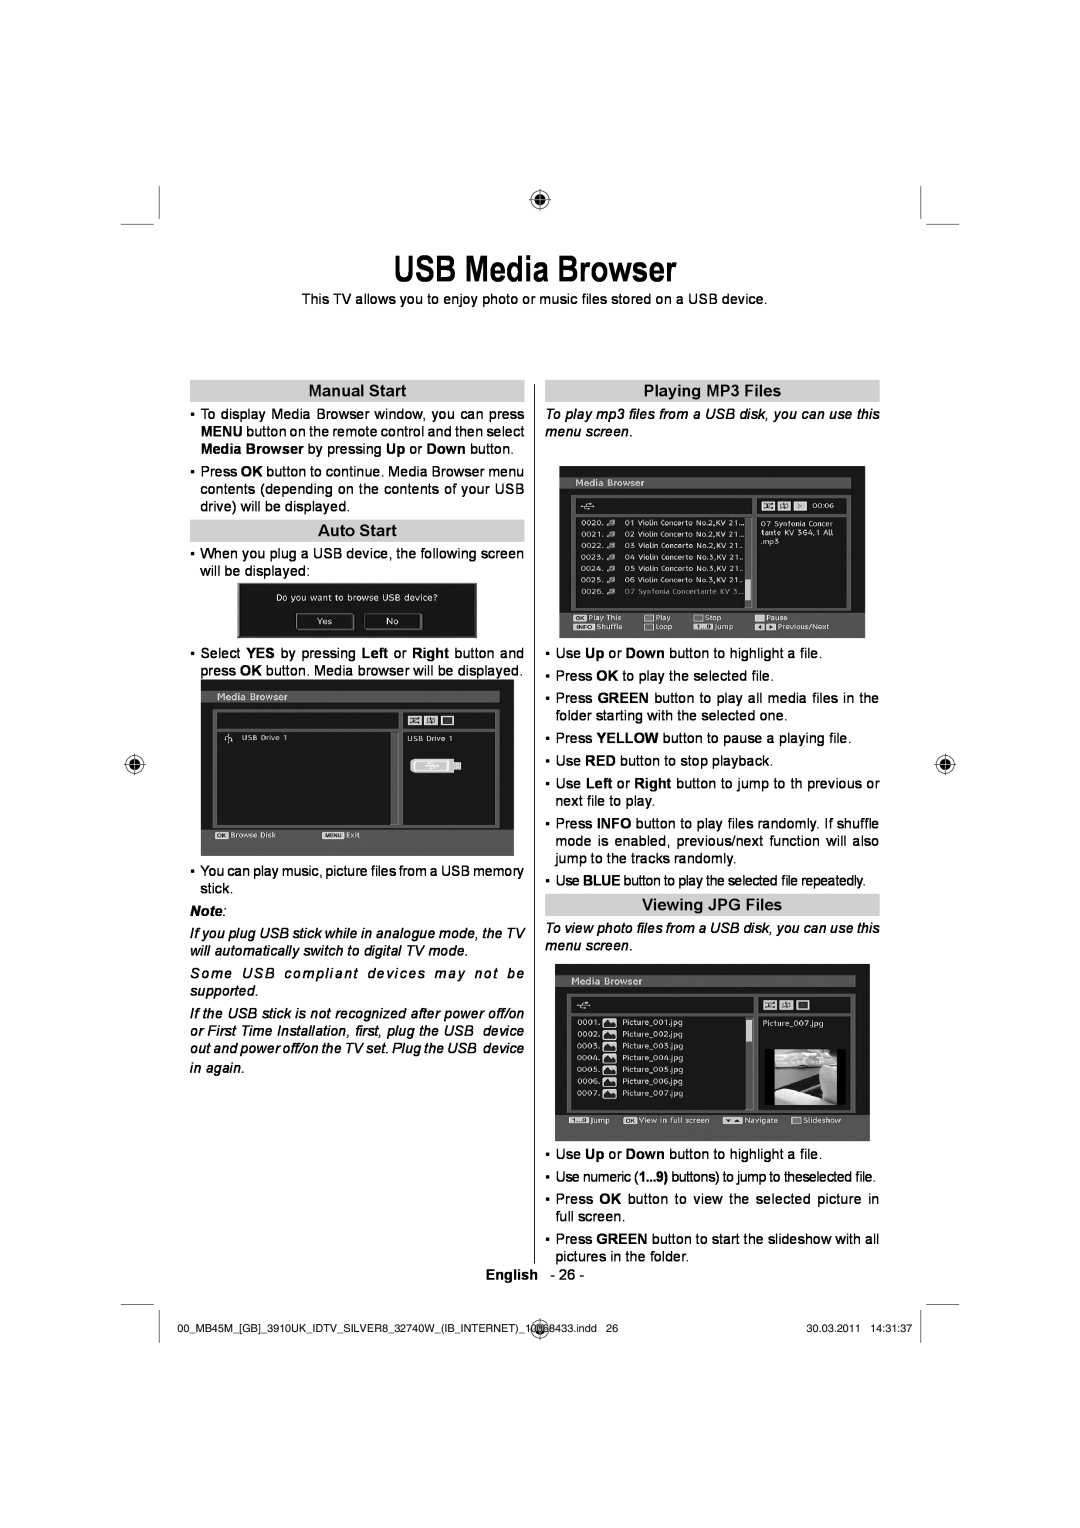 Toshiba 32BV500B owner manual USB Media Browser, Manual Start, Auto Start, Playing MP3 Files, Viewing JPG Files 